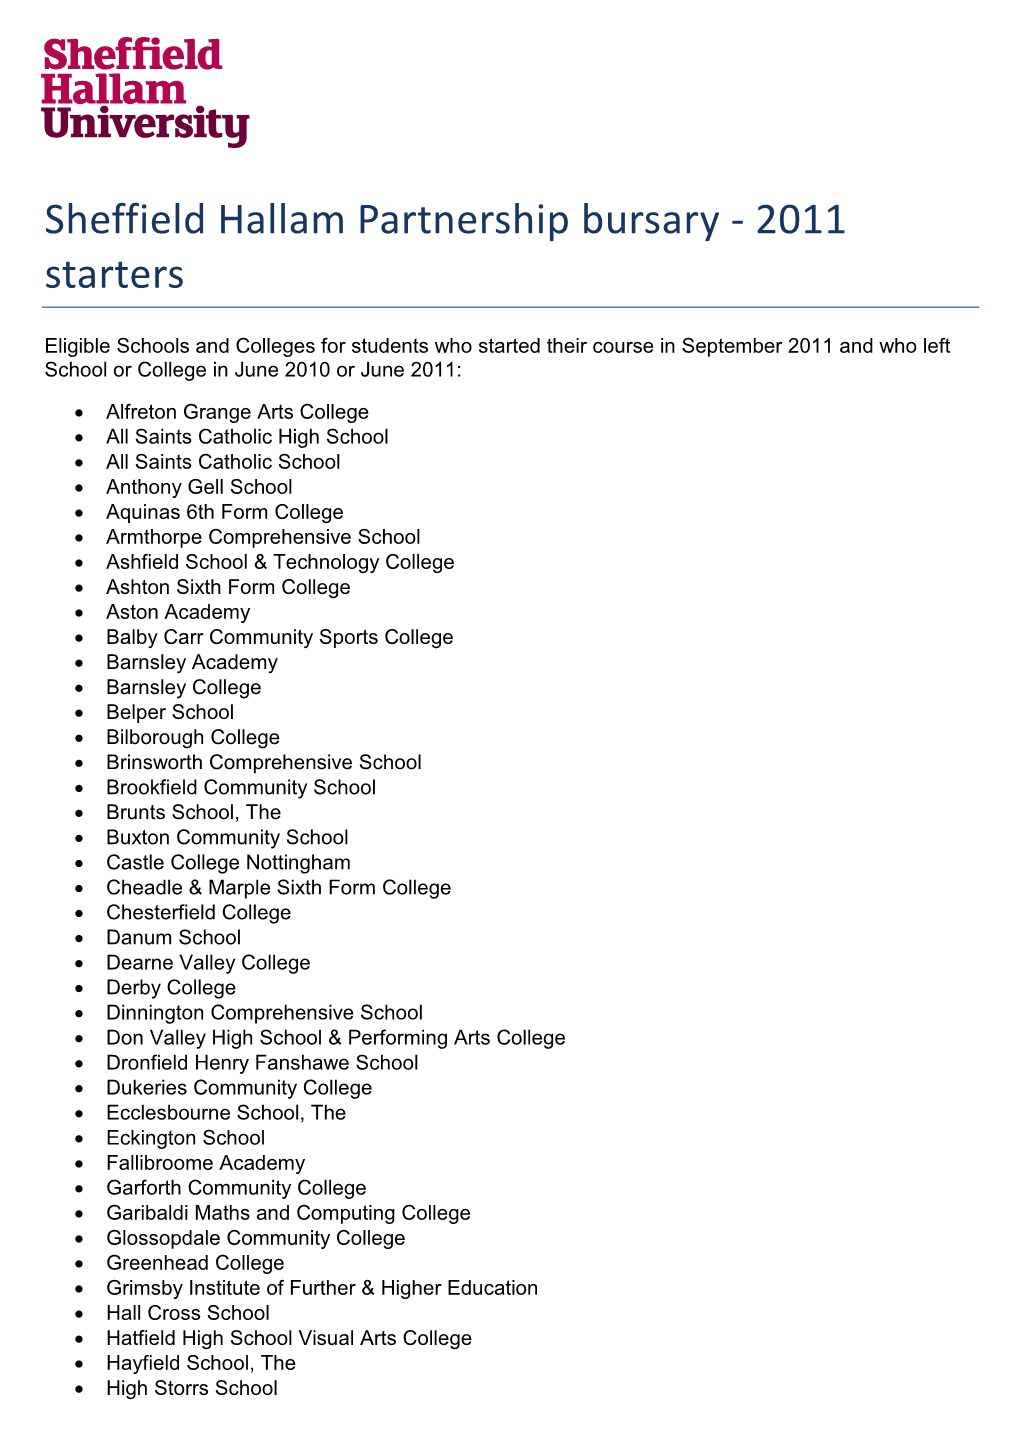 Sheffield Hallam Partnership Bursary - 2011 Starters